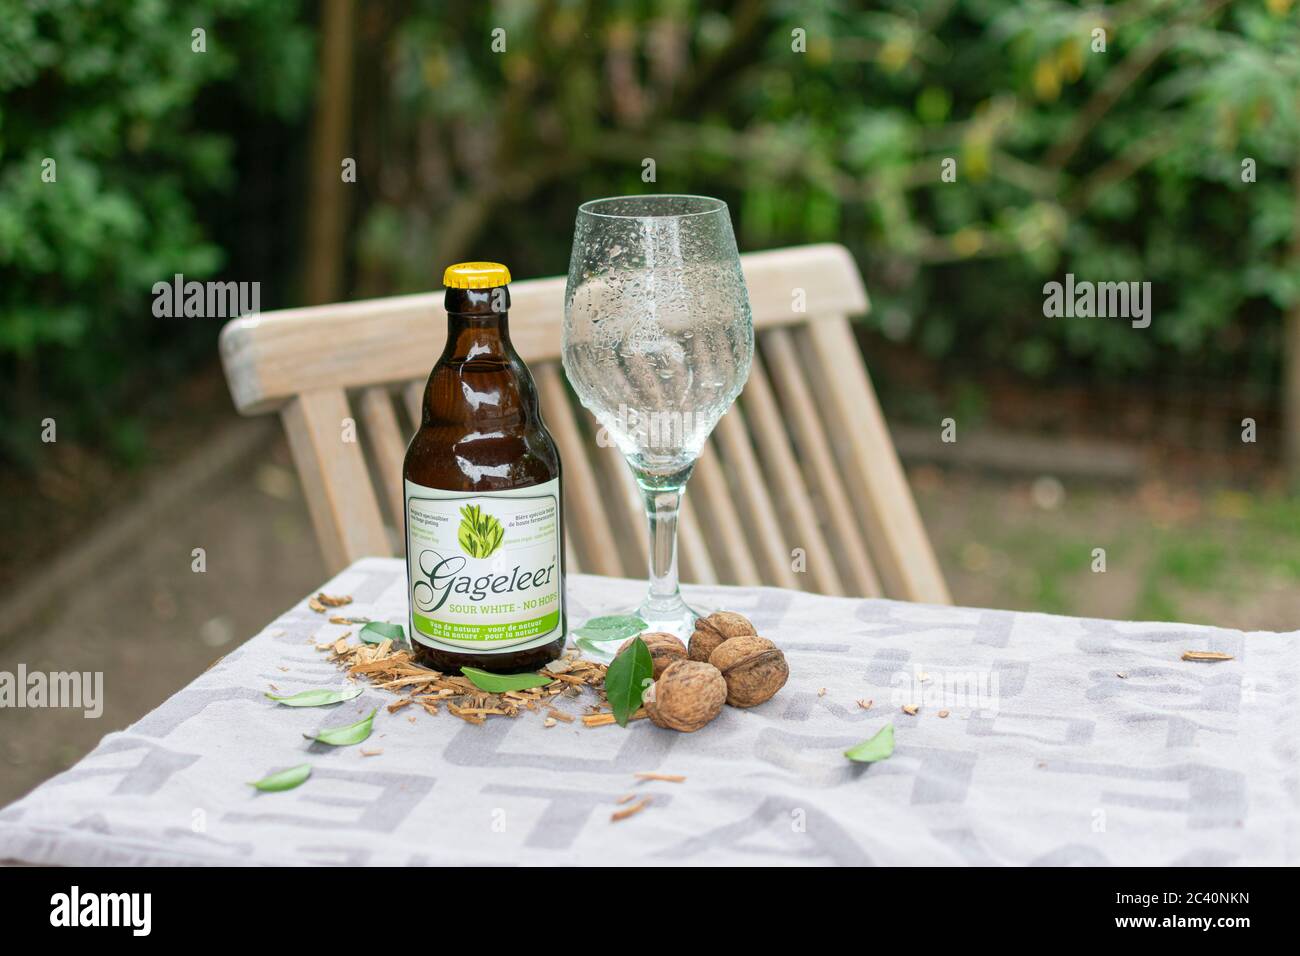 Sint Gillis Waas, 22 de mayo de 2020, Gageleer Craft cerveza belga Sour White no Hops es una cerveza de trigo fermentada de primera Foto de stock